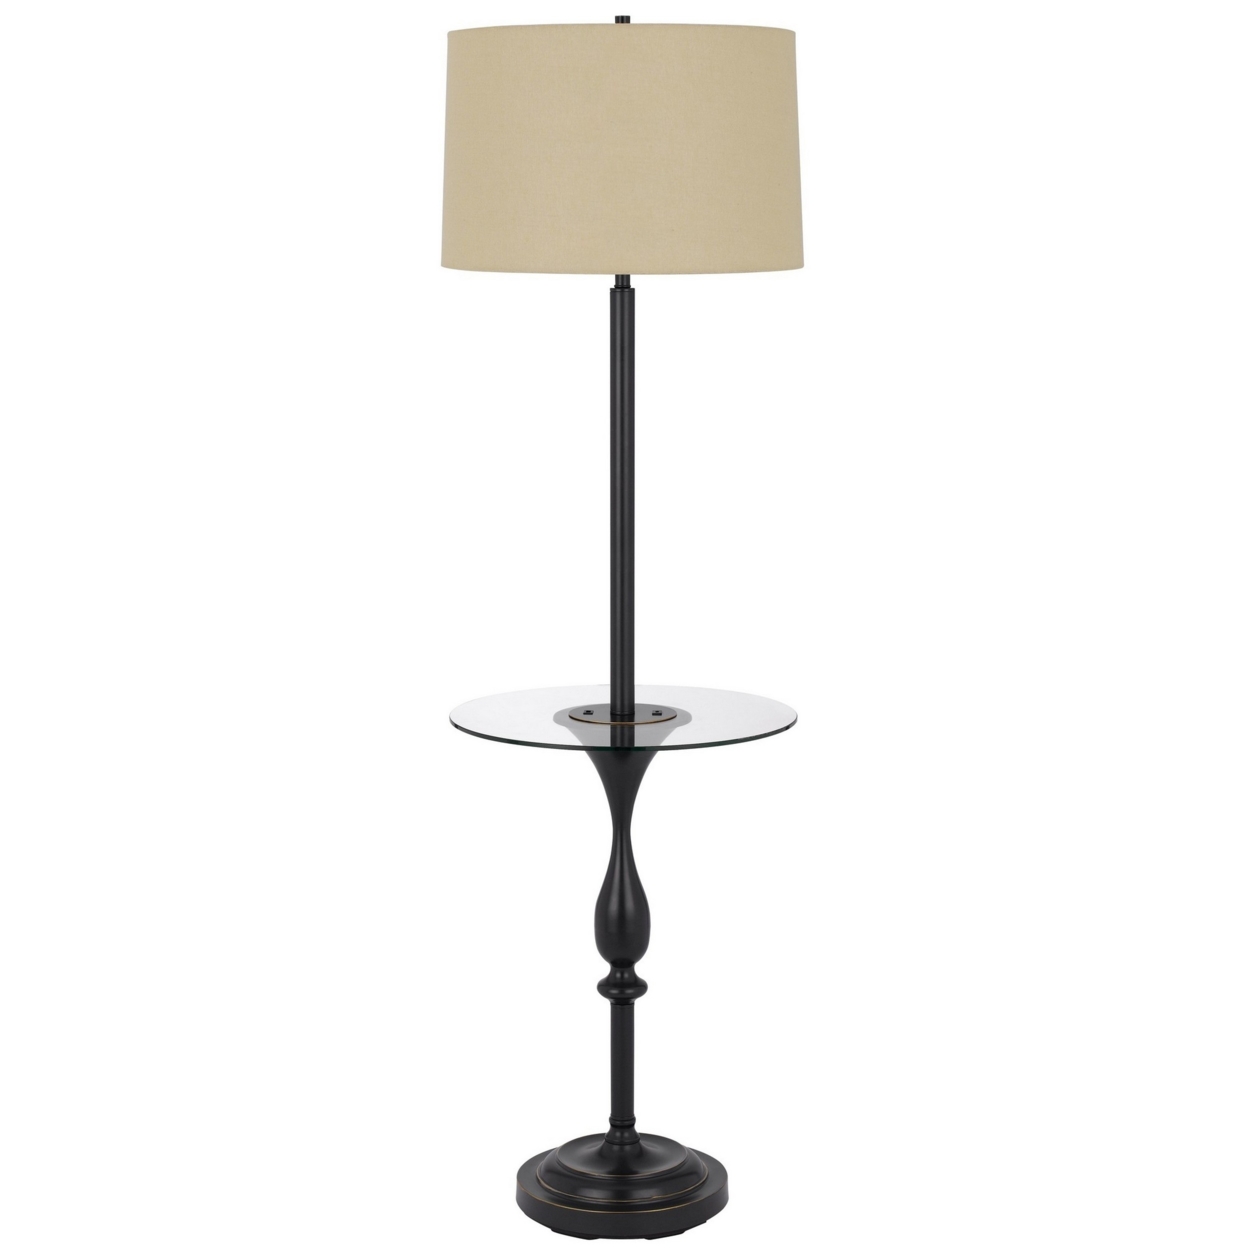 Ava 61 Inch Modern Floor Lamp, Glass Tray Table, 1 USB Port, Dark Bronze- Saltoro Sherpi